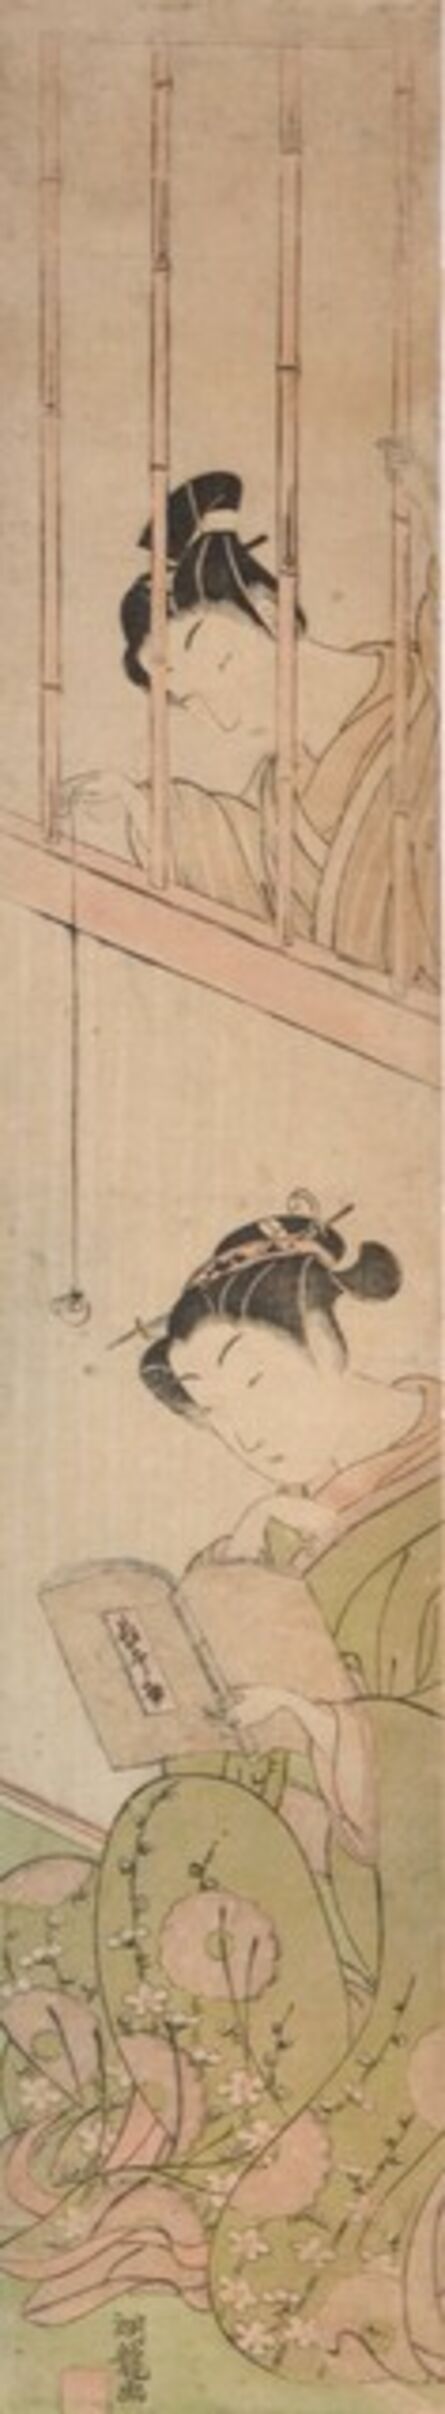 Isoda Koryusai, ‘The Tease’, ca. 1770